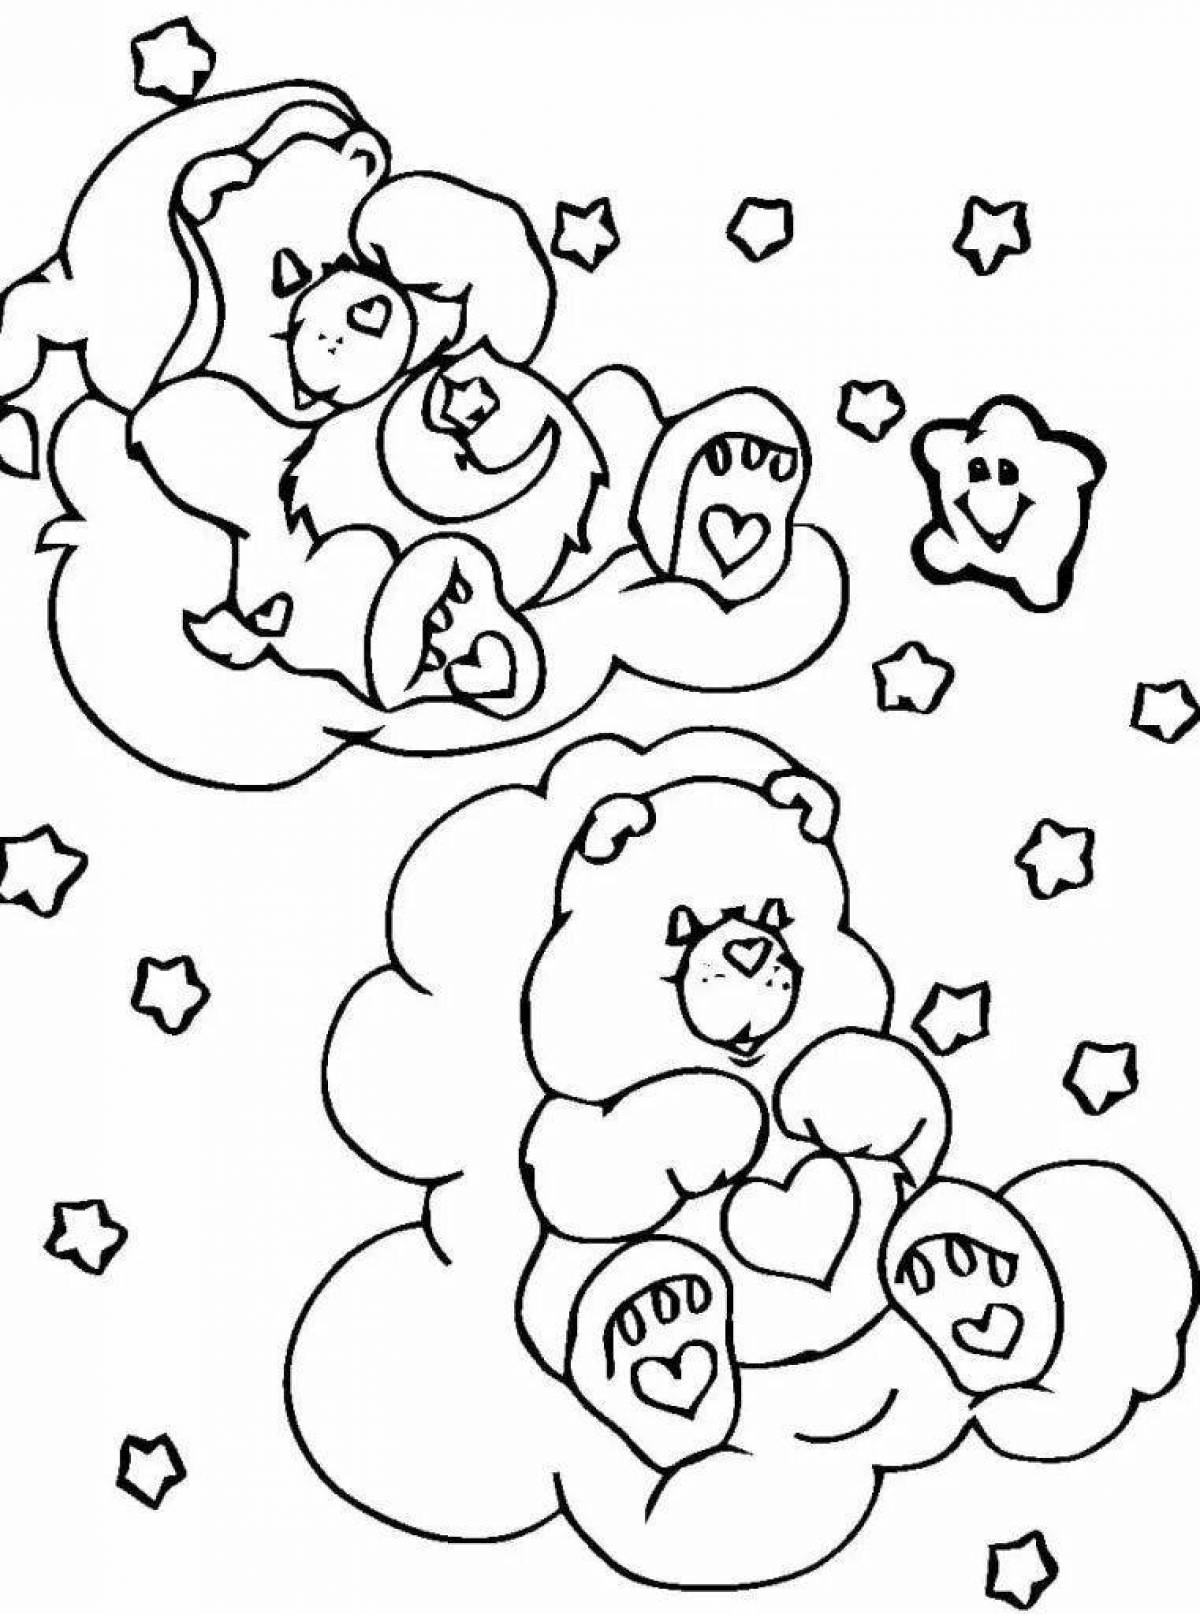 Care bears #3